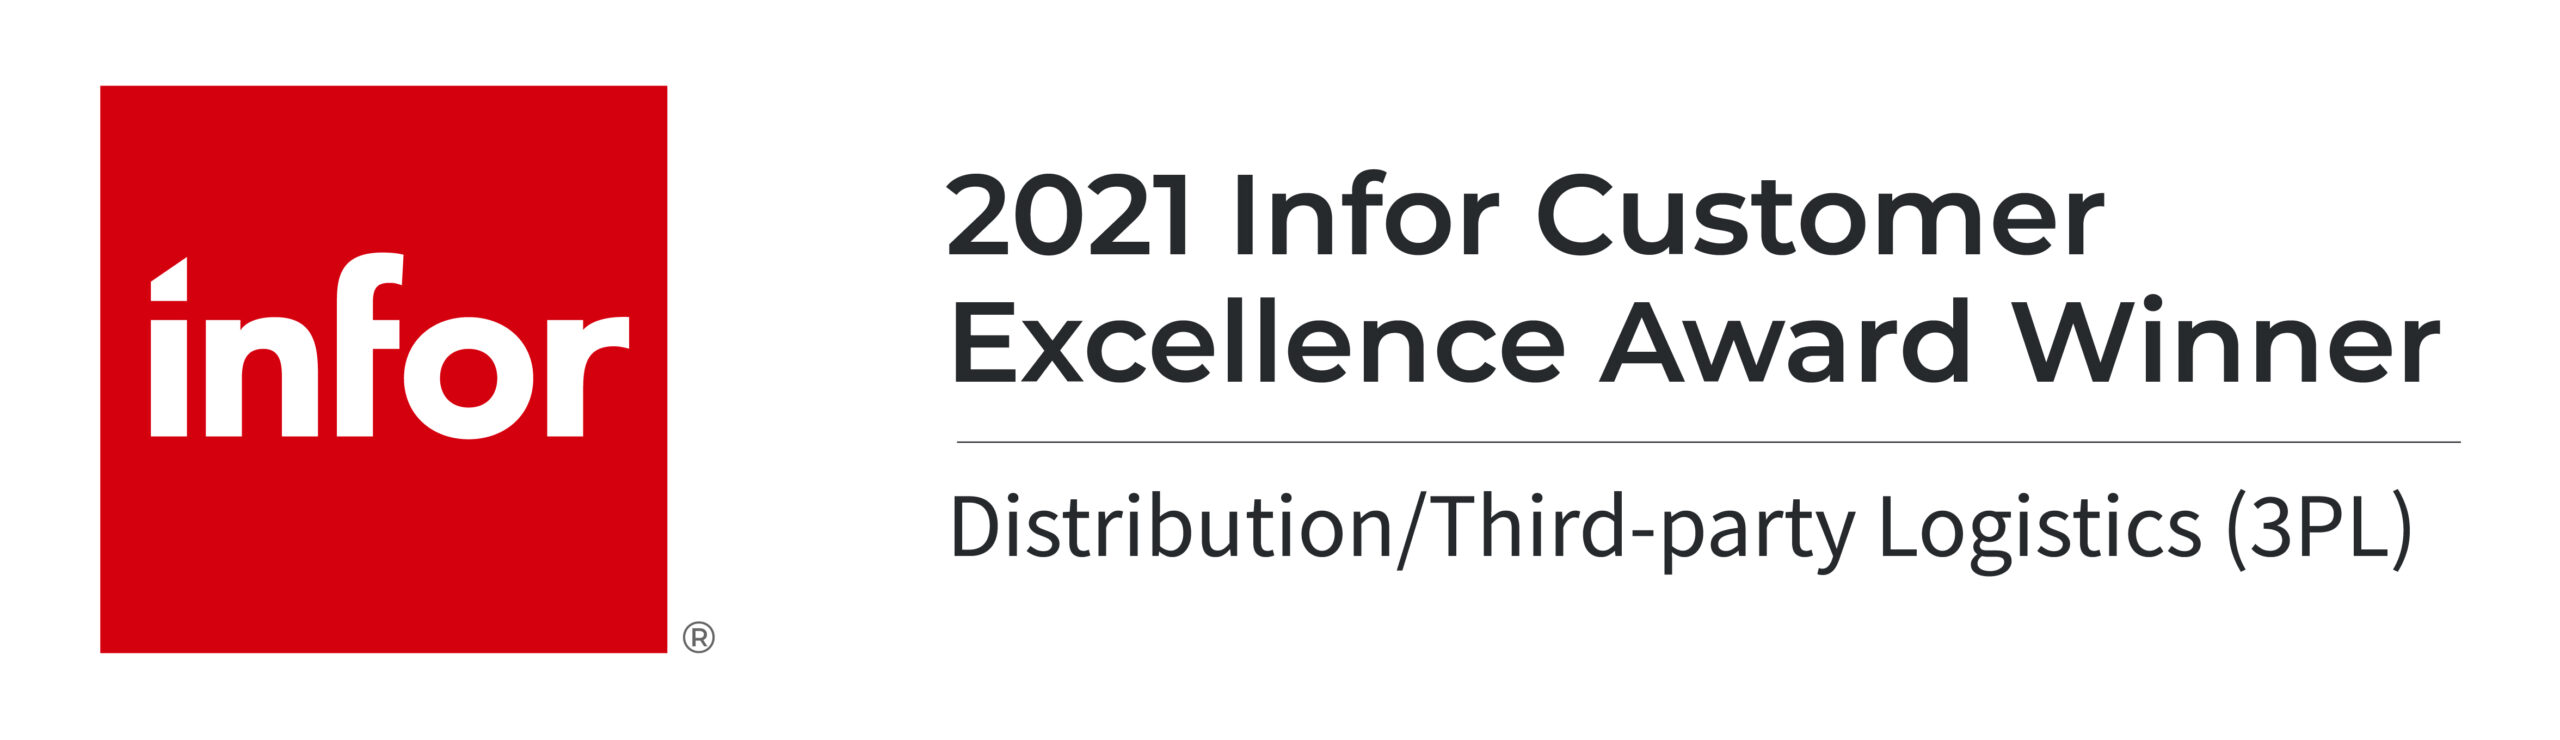 2021 infor cusotmer excellence award winner